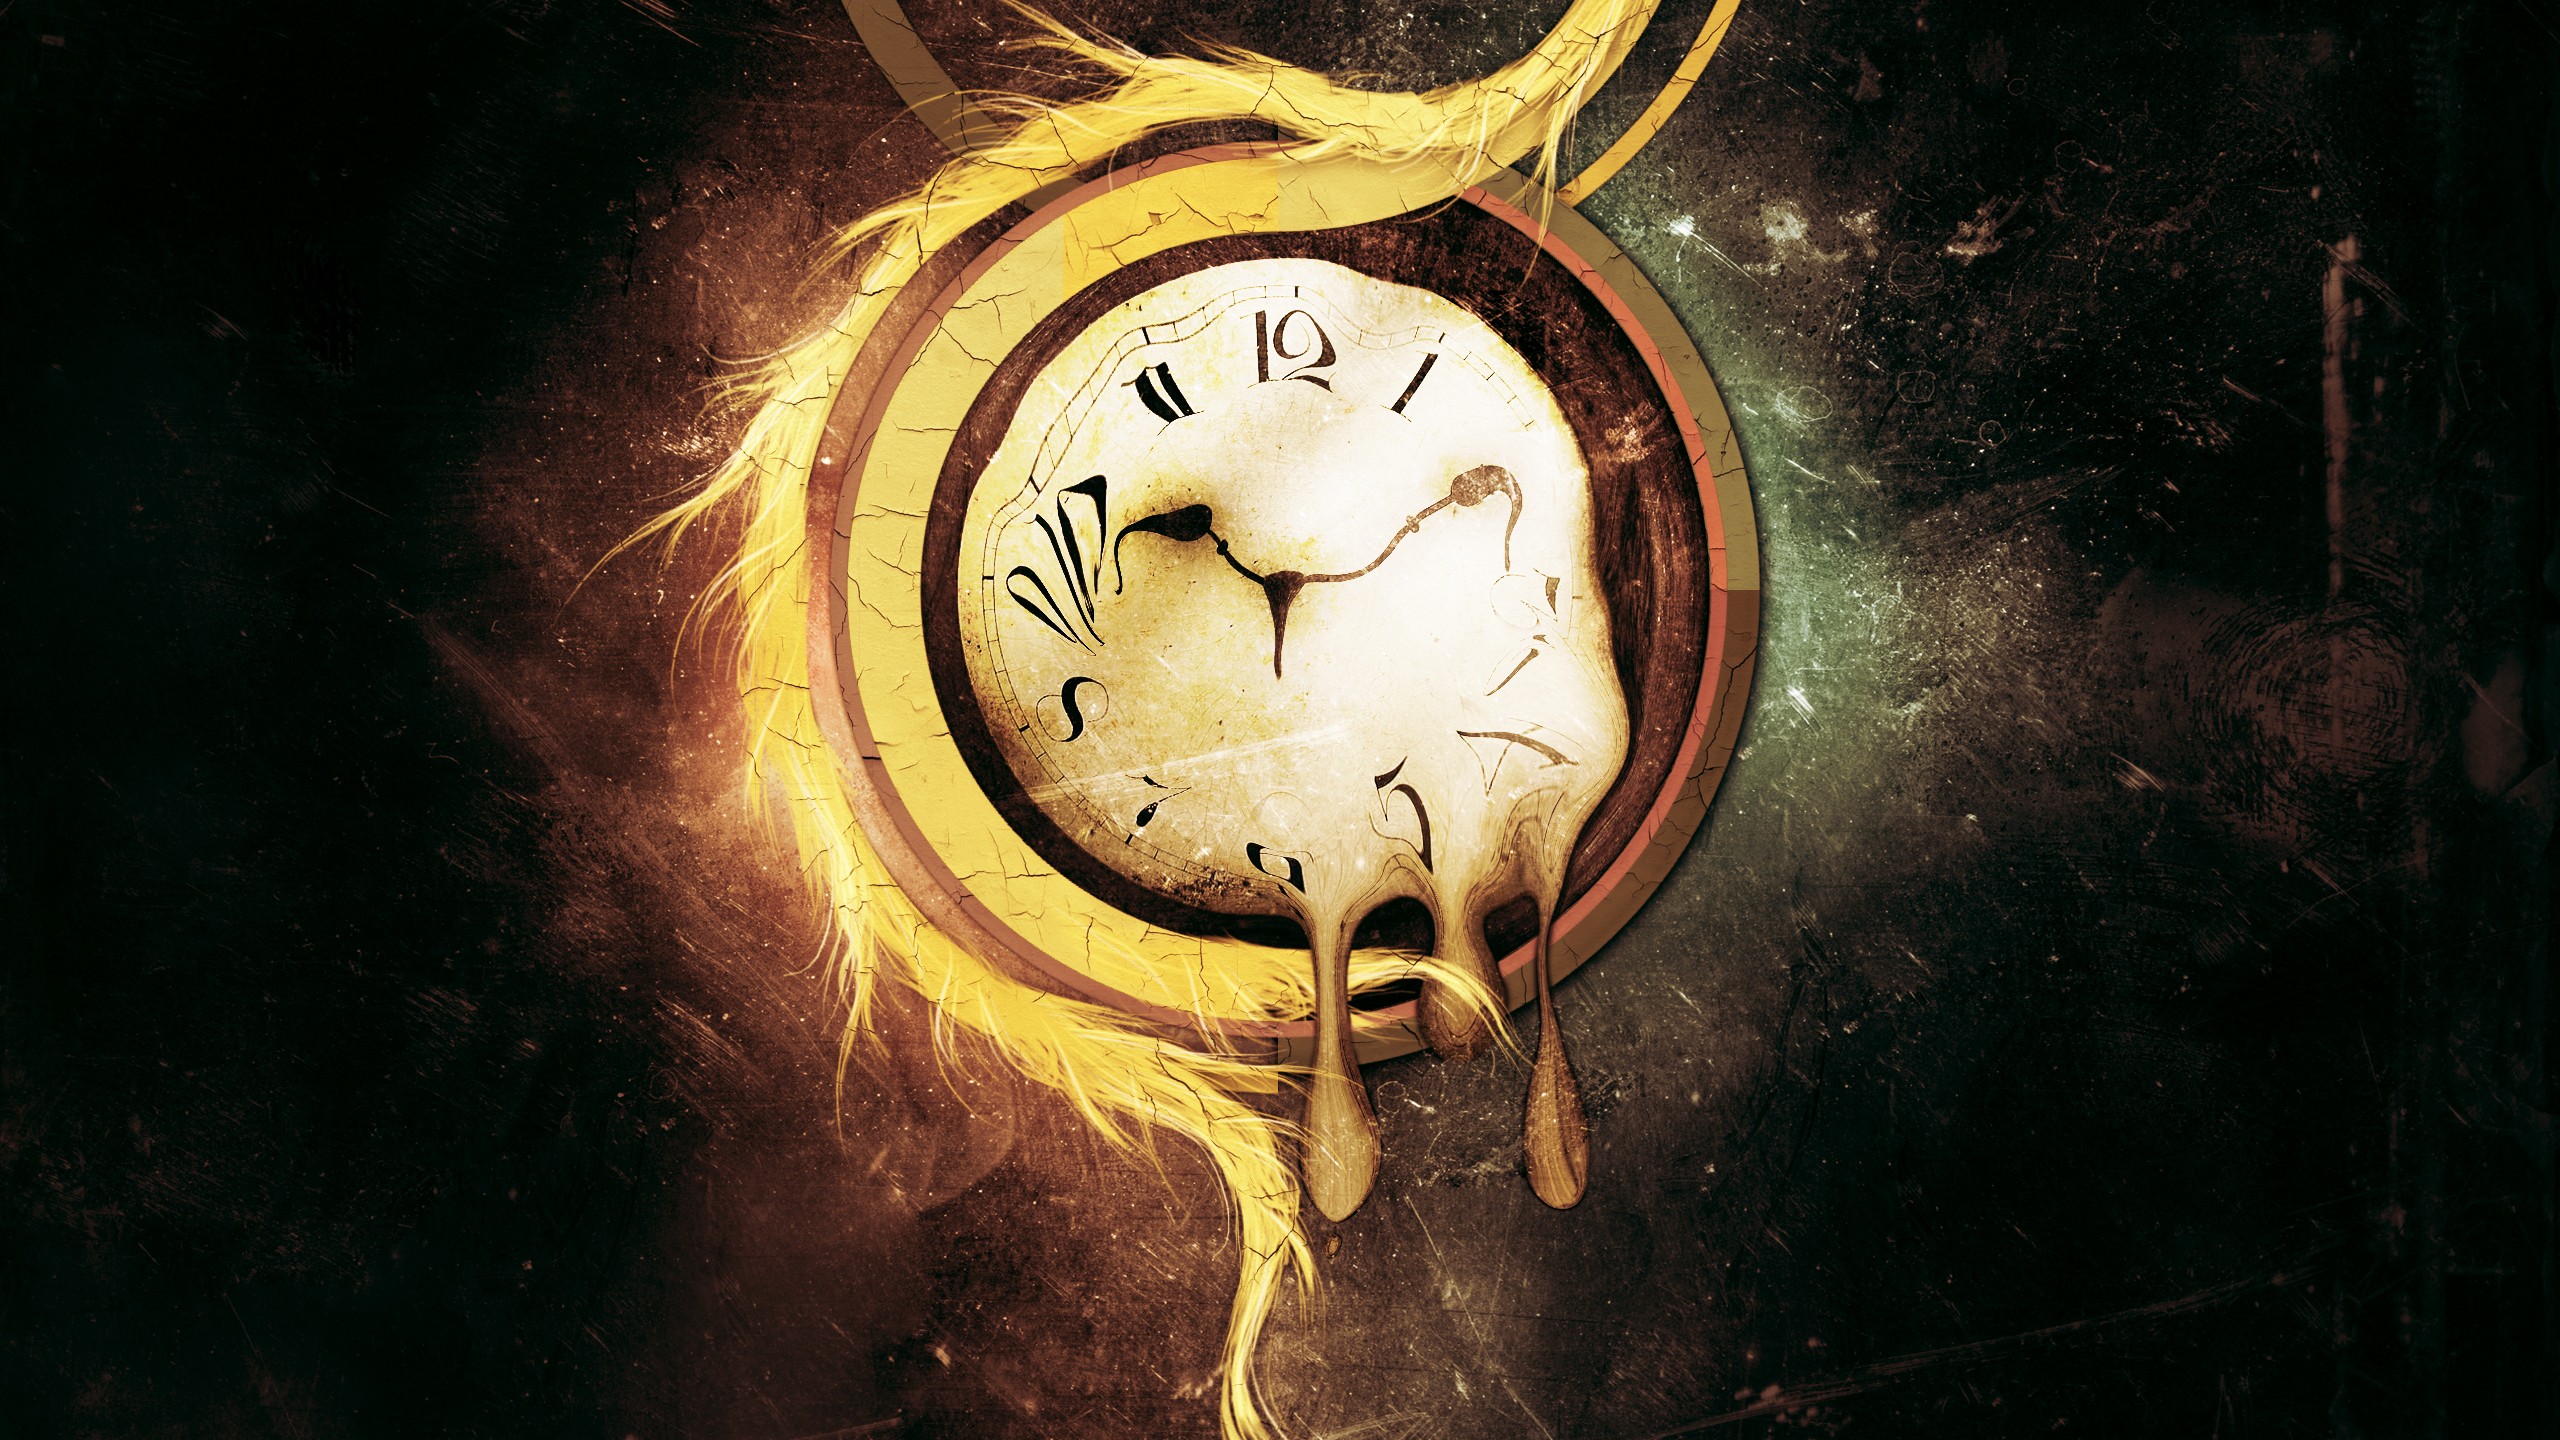 Melting Clocks Grunge Artwork Lacza Digital Art Surreal 2560x1440